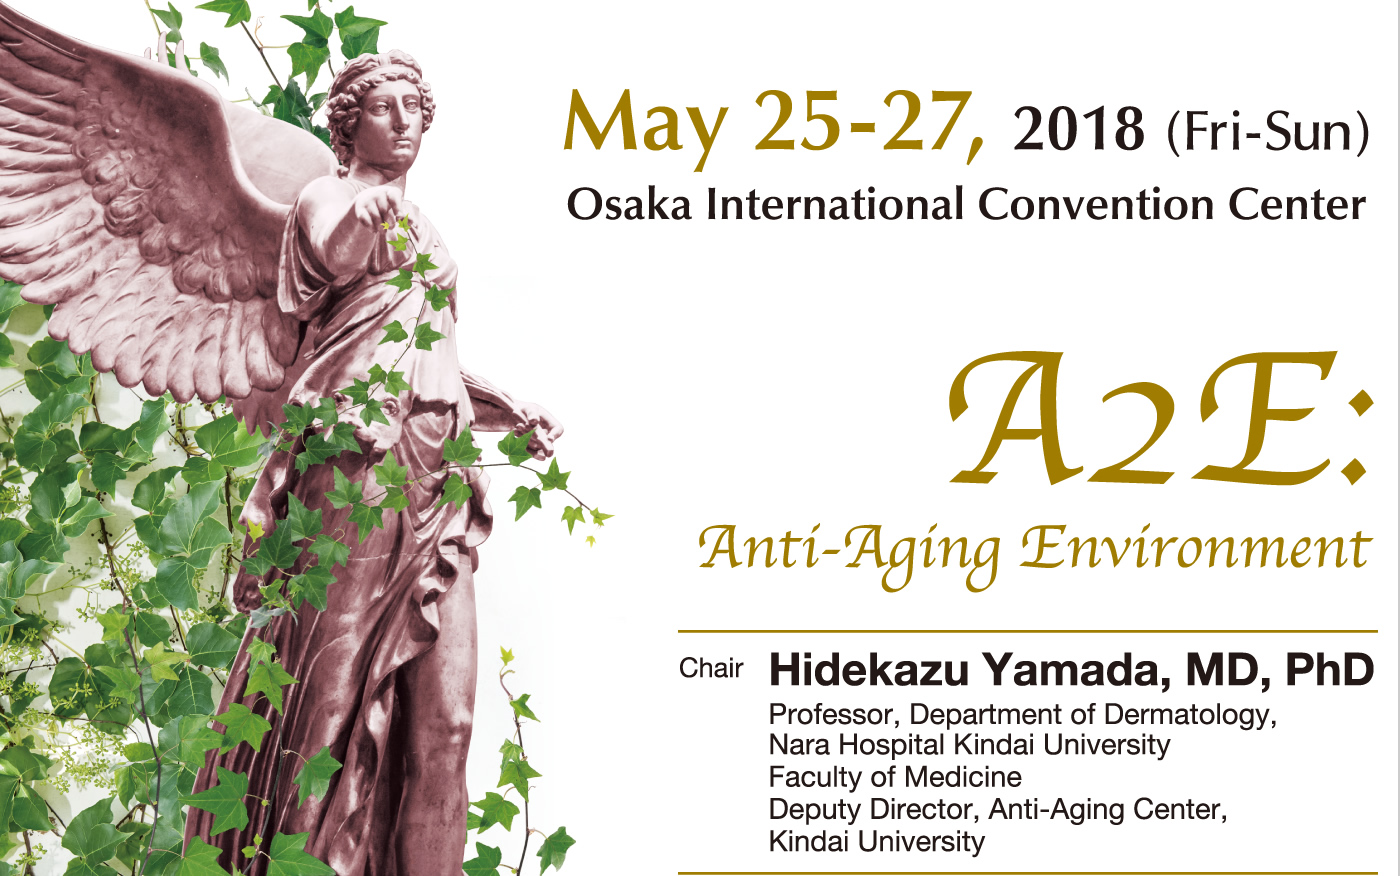 May 25-27, 2018 (Fri-Sun)
Osaka International Convention Center
Chair:
 Hidekazu Yamada, MD, PhD
 Professor, Department of Dermatology,
 Nara Hospital Kindai University
 Faculty of Medicine
 Deputy Director, Anti-Aging Center,
 Kindai University